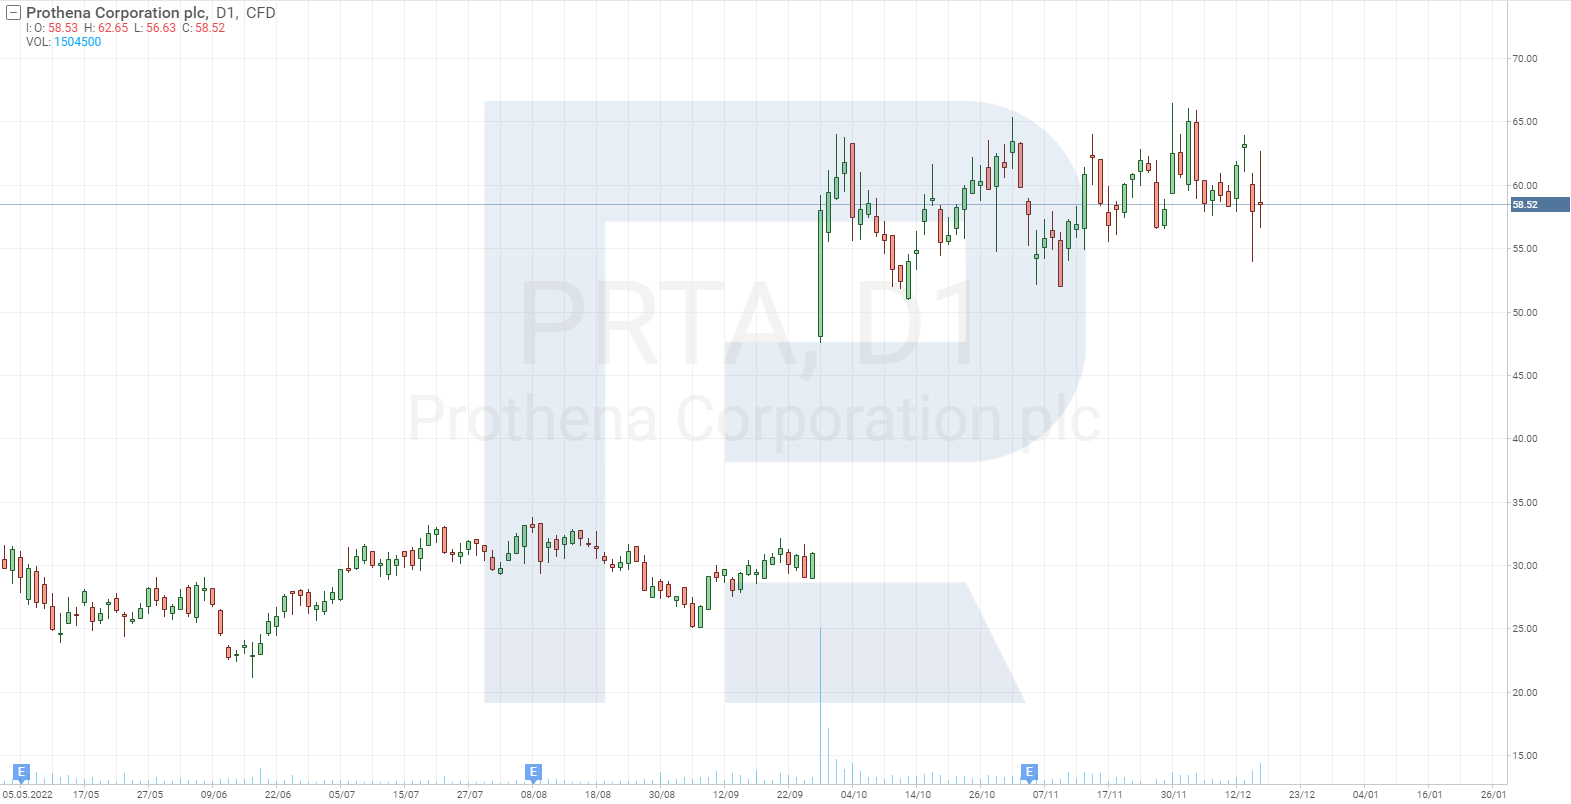 Stock price chart of Prothena Corporation